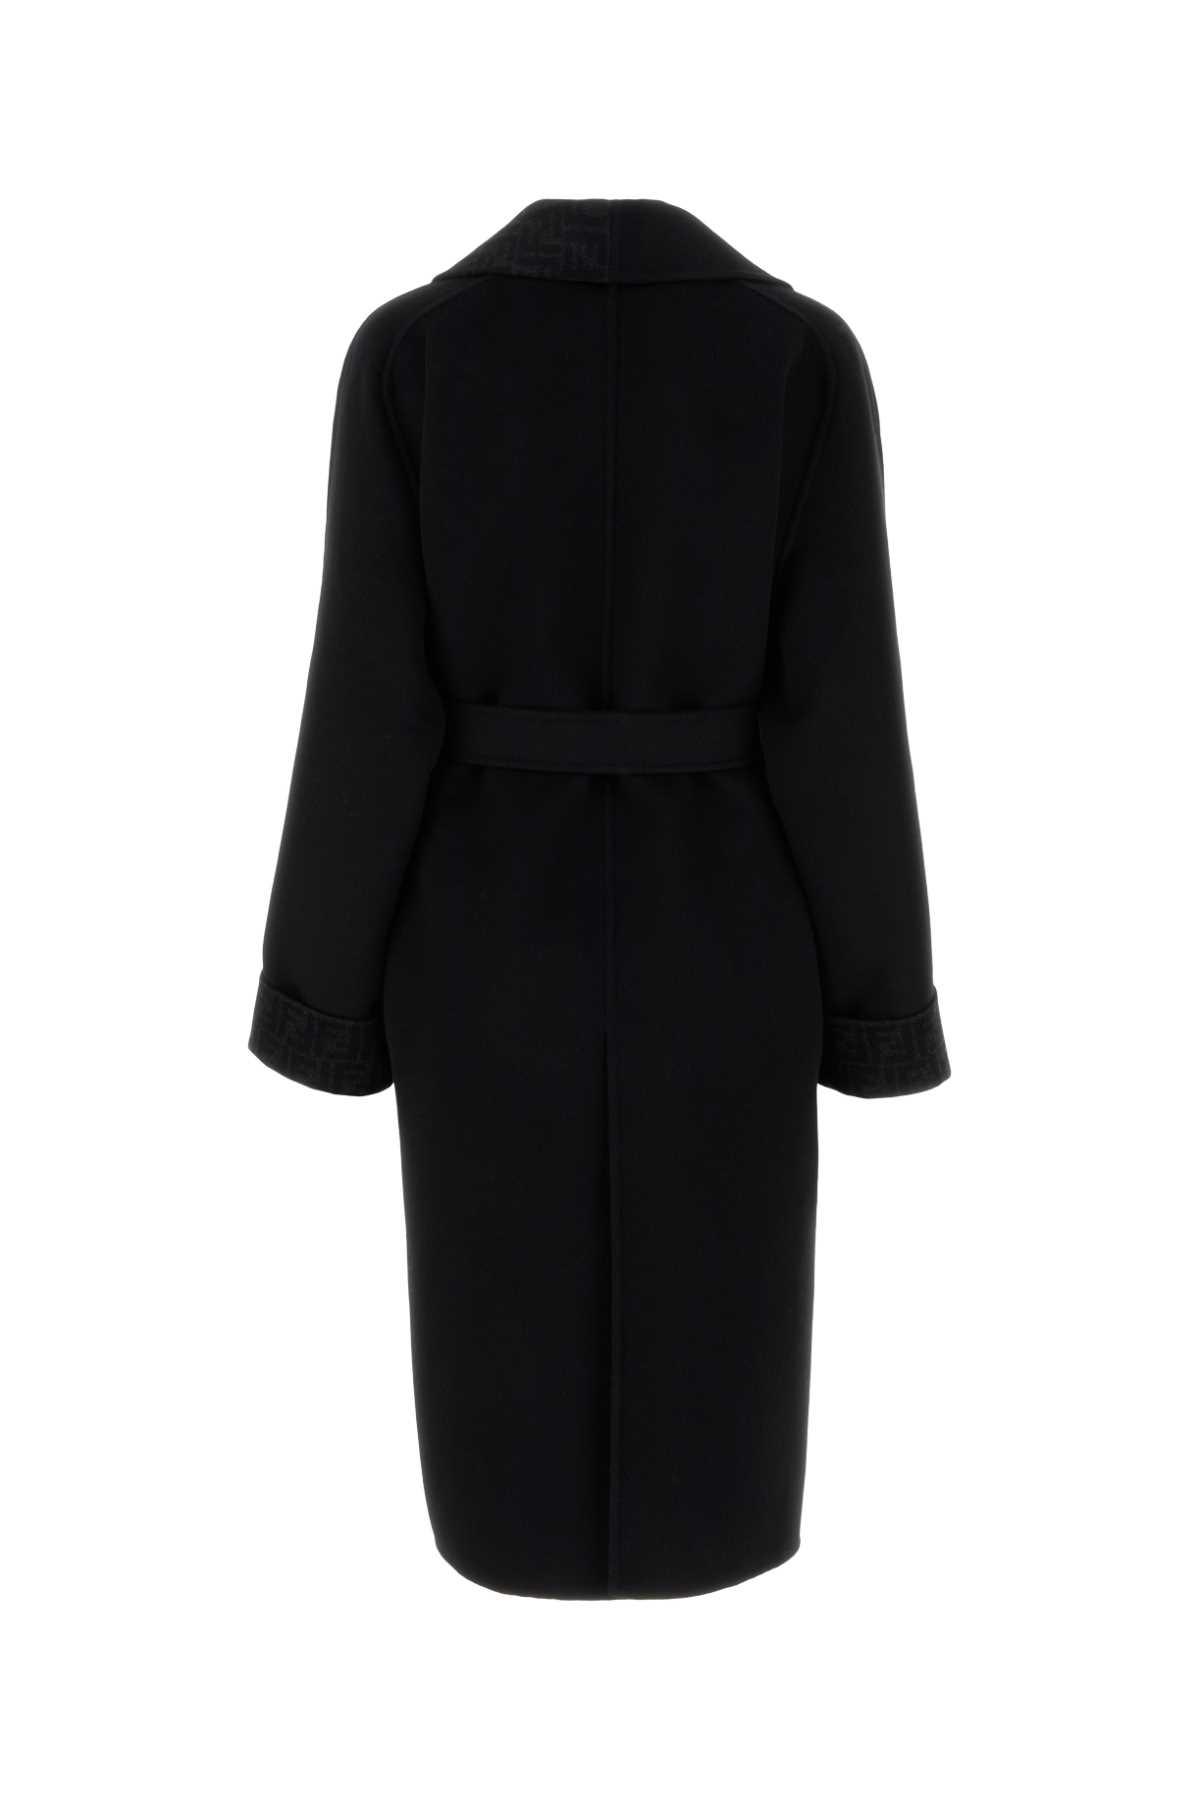 Fendi Black Wool Blend Coat In Blackgrey